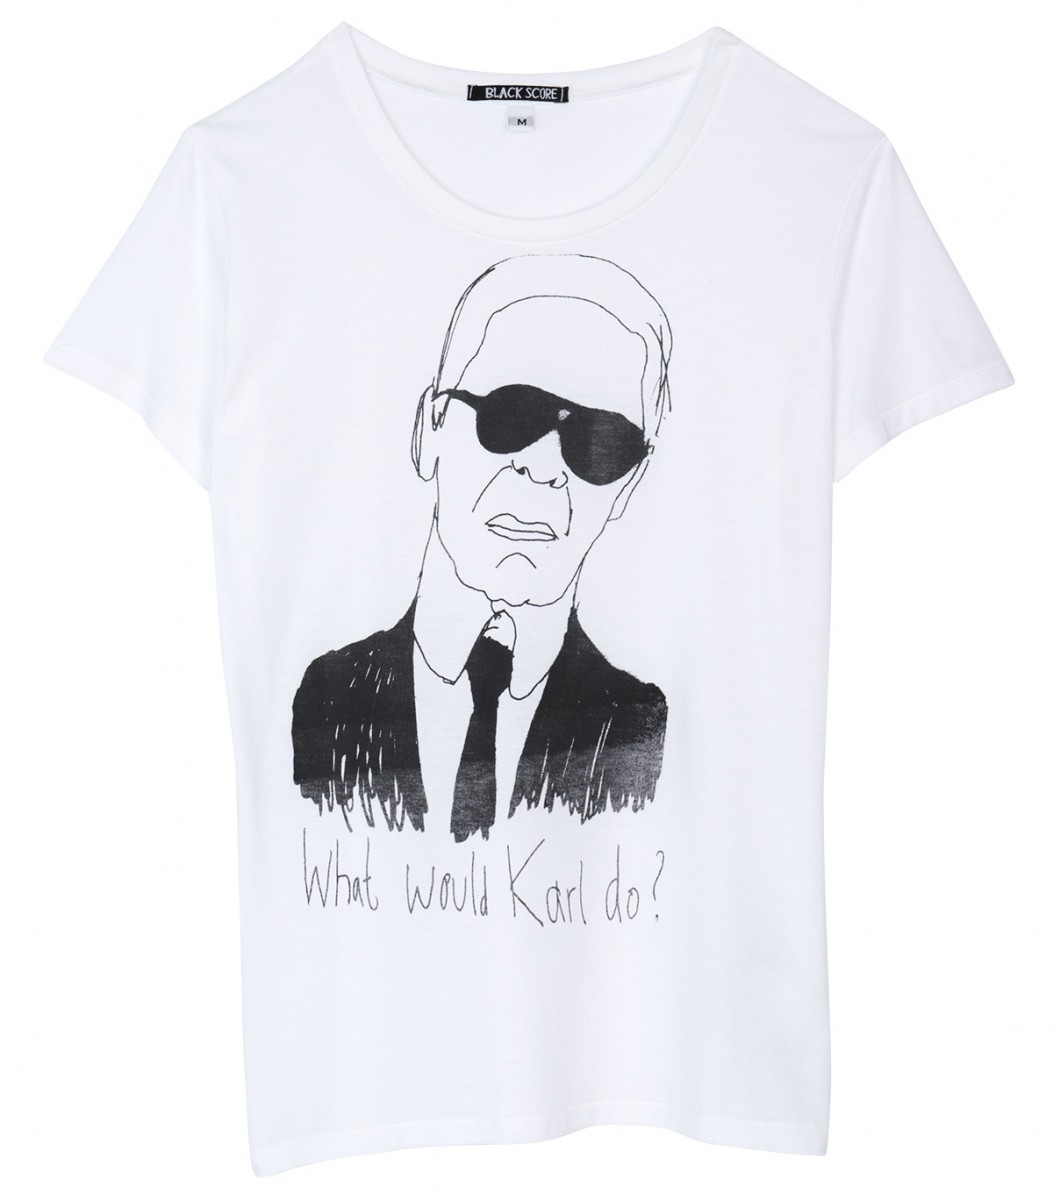 Black Score "What would Karl do?" t-shirt